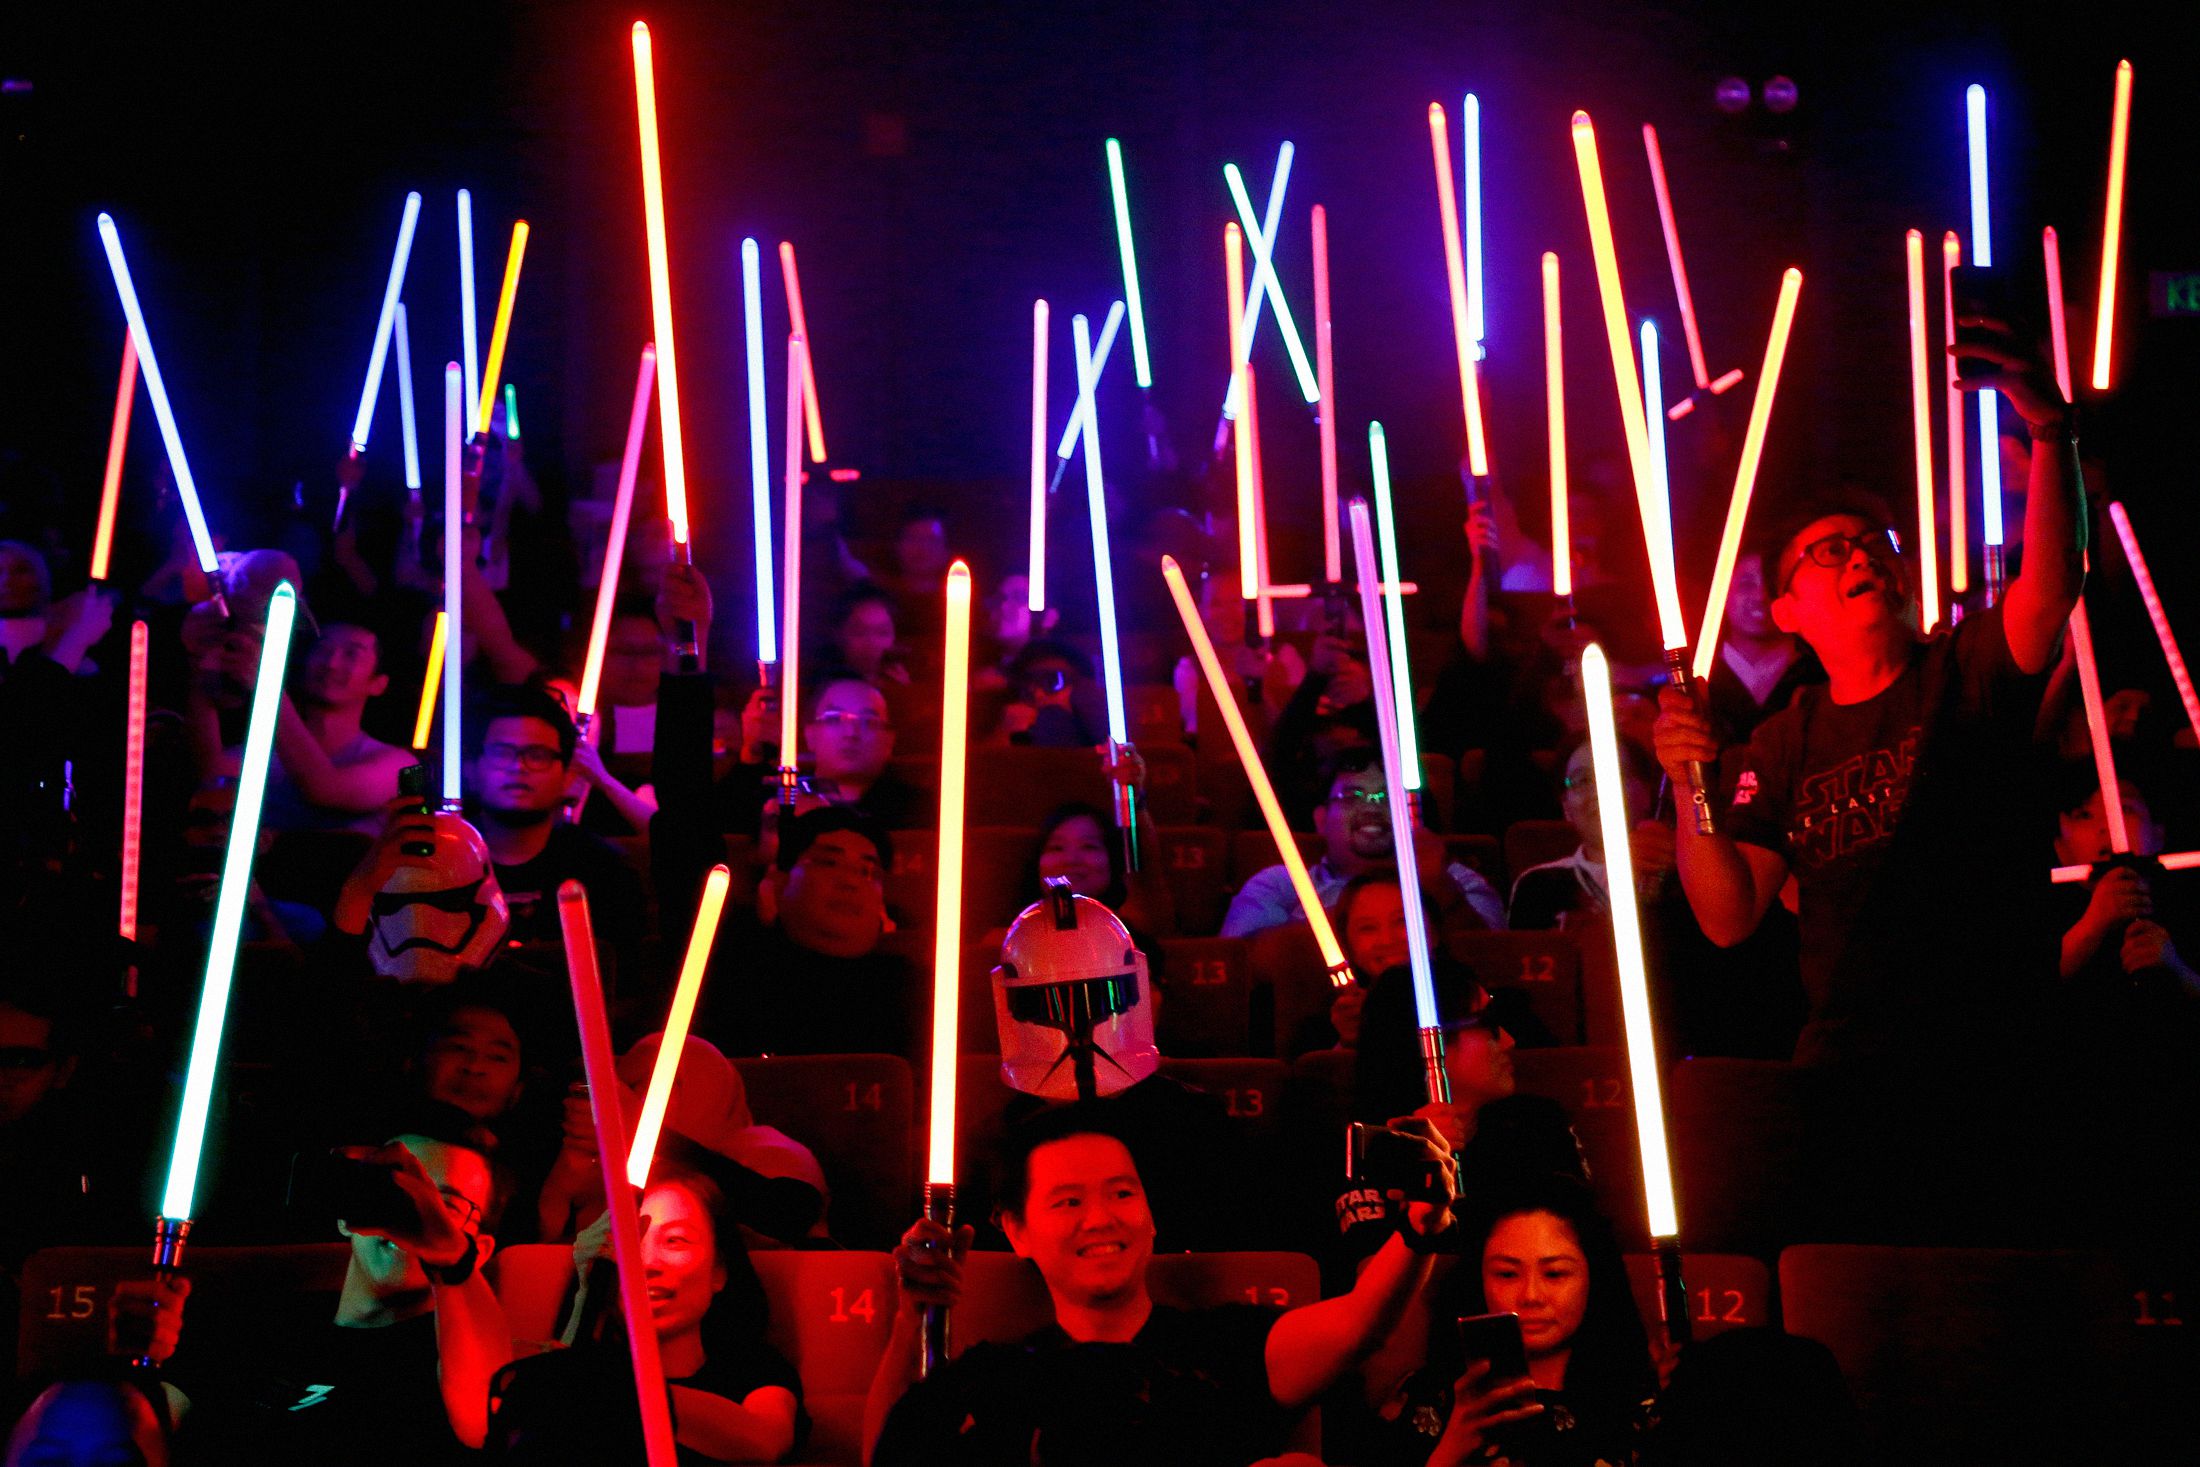 Star Wars fans raise their lightsabers before the start&nbsp;of Star Wars: The Last Jedi&nbsp;in Subang Jaya, Malaysia, on Dec. 15, 2017.&nbsp;